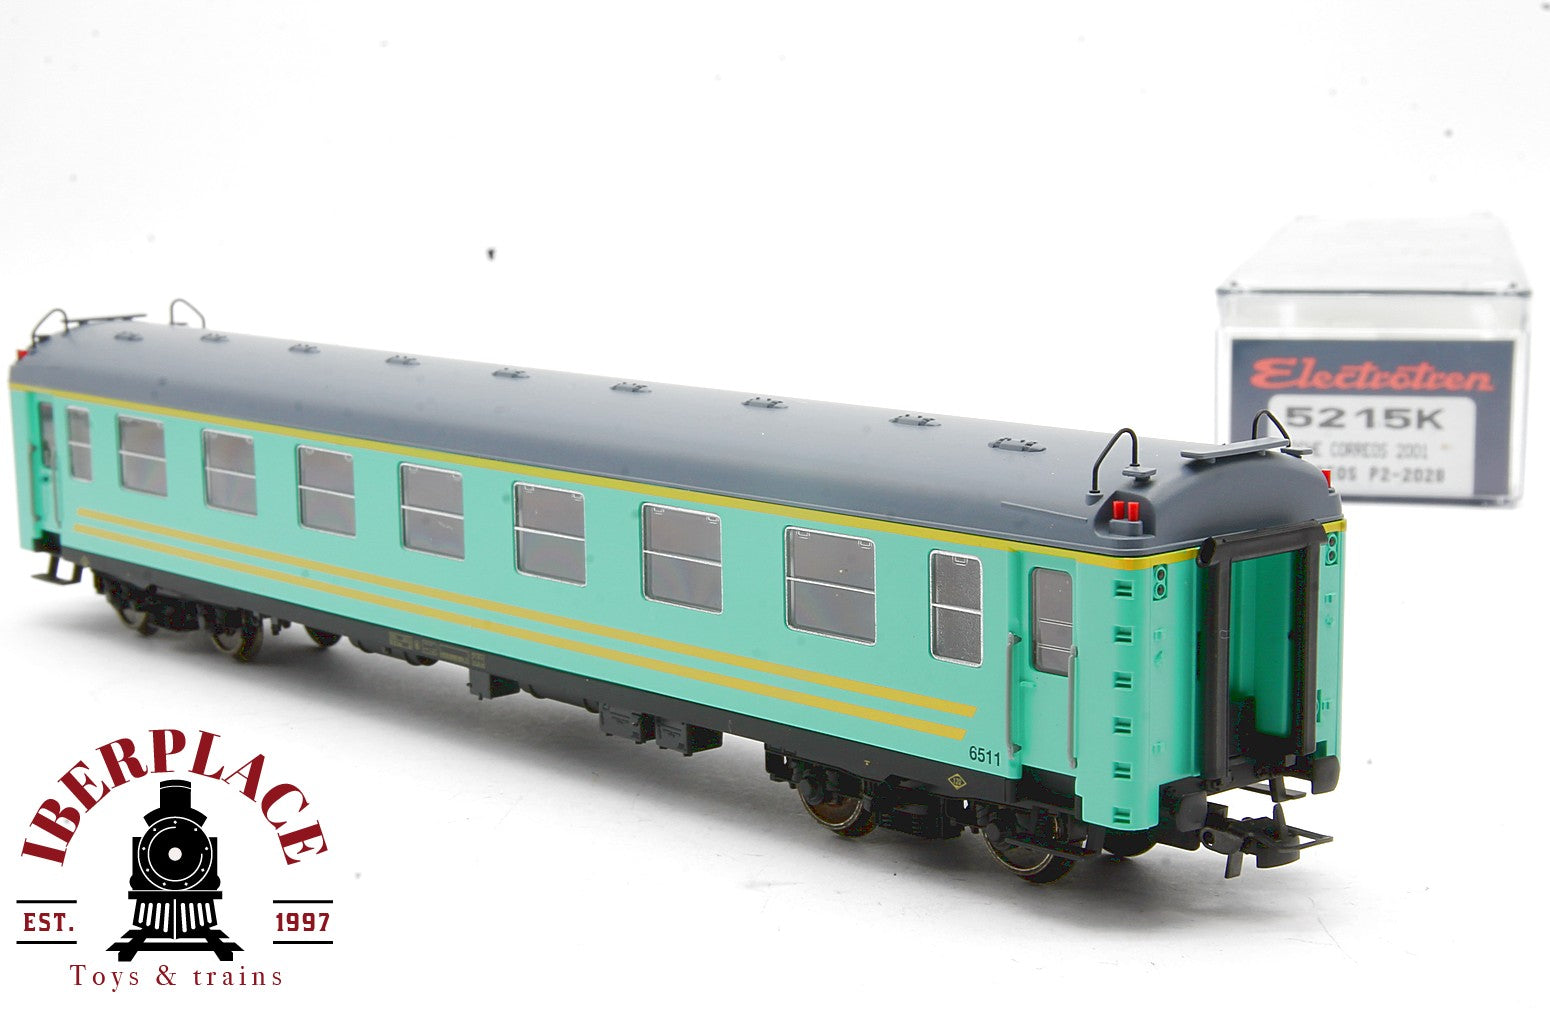 Electrotren 5215K vagón pasajeros RENFE R.N 6511 escala H0 1:87 ho 00